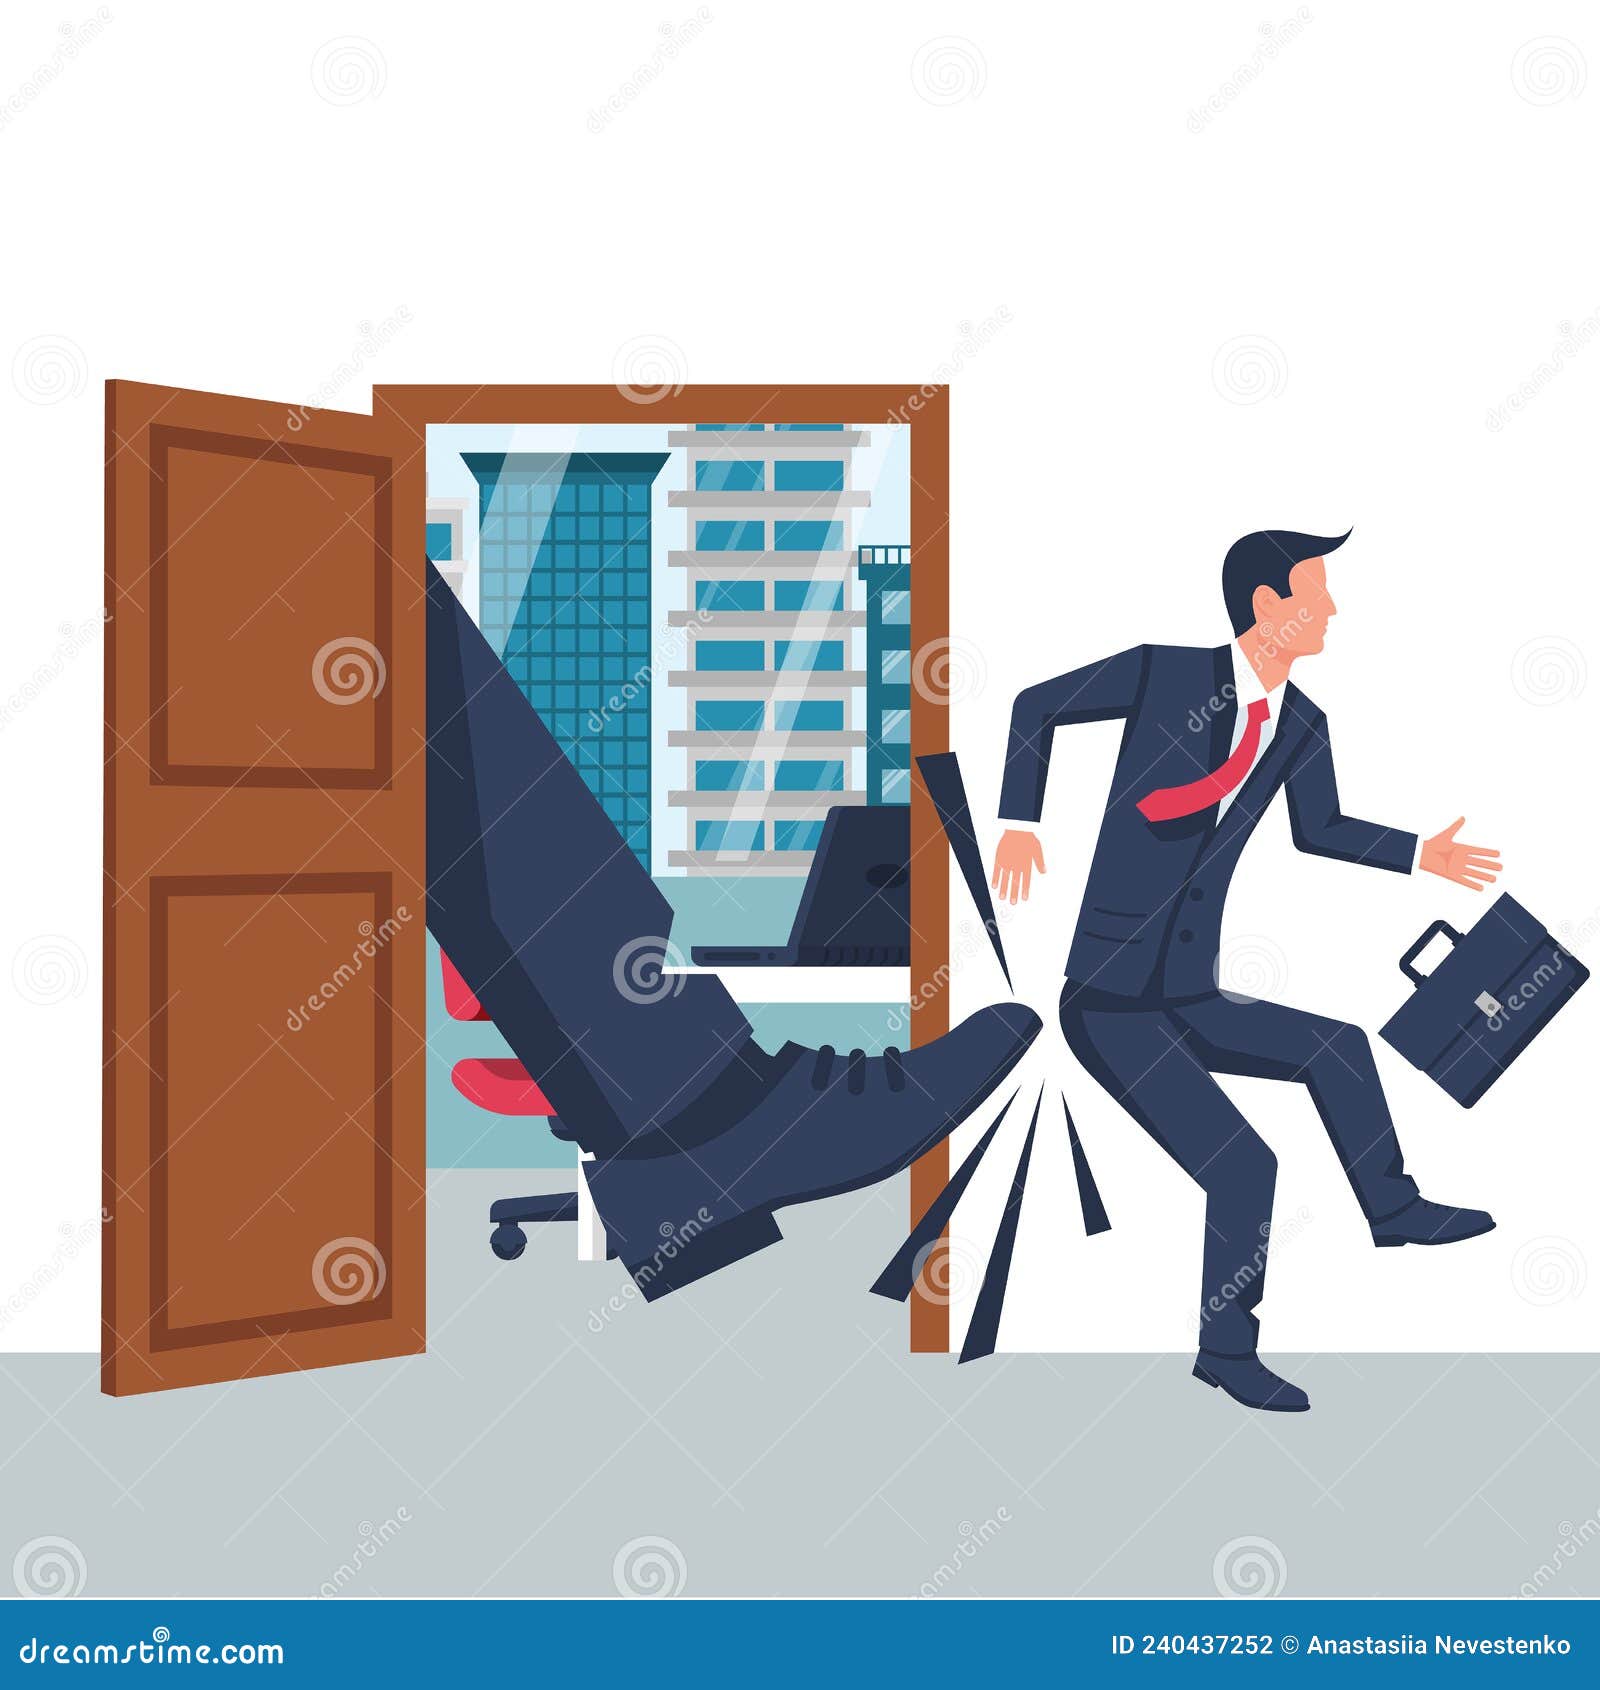 Businesswoman Being Kicked Out Door Dismissed Her Job Boss Kick Stock  Vector by ©ChompoonuthVajarodaya 499424840